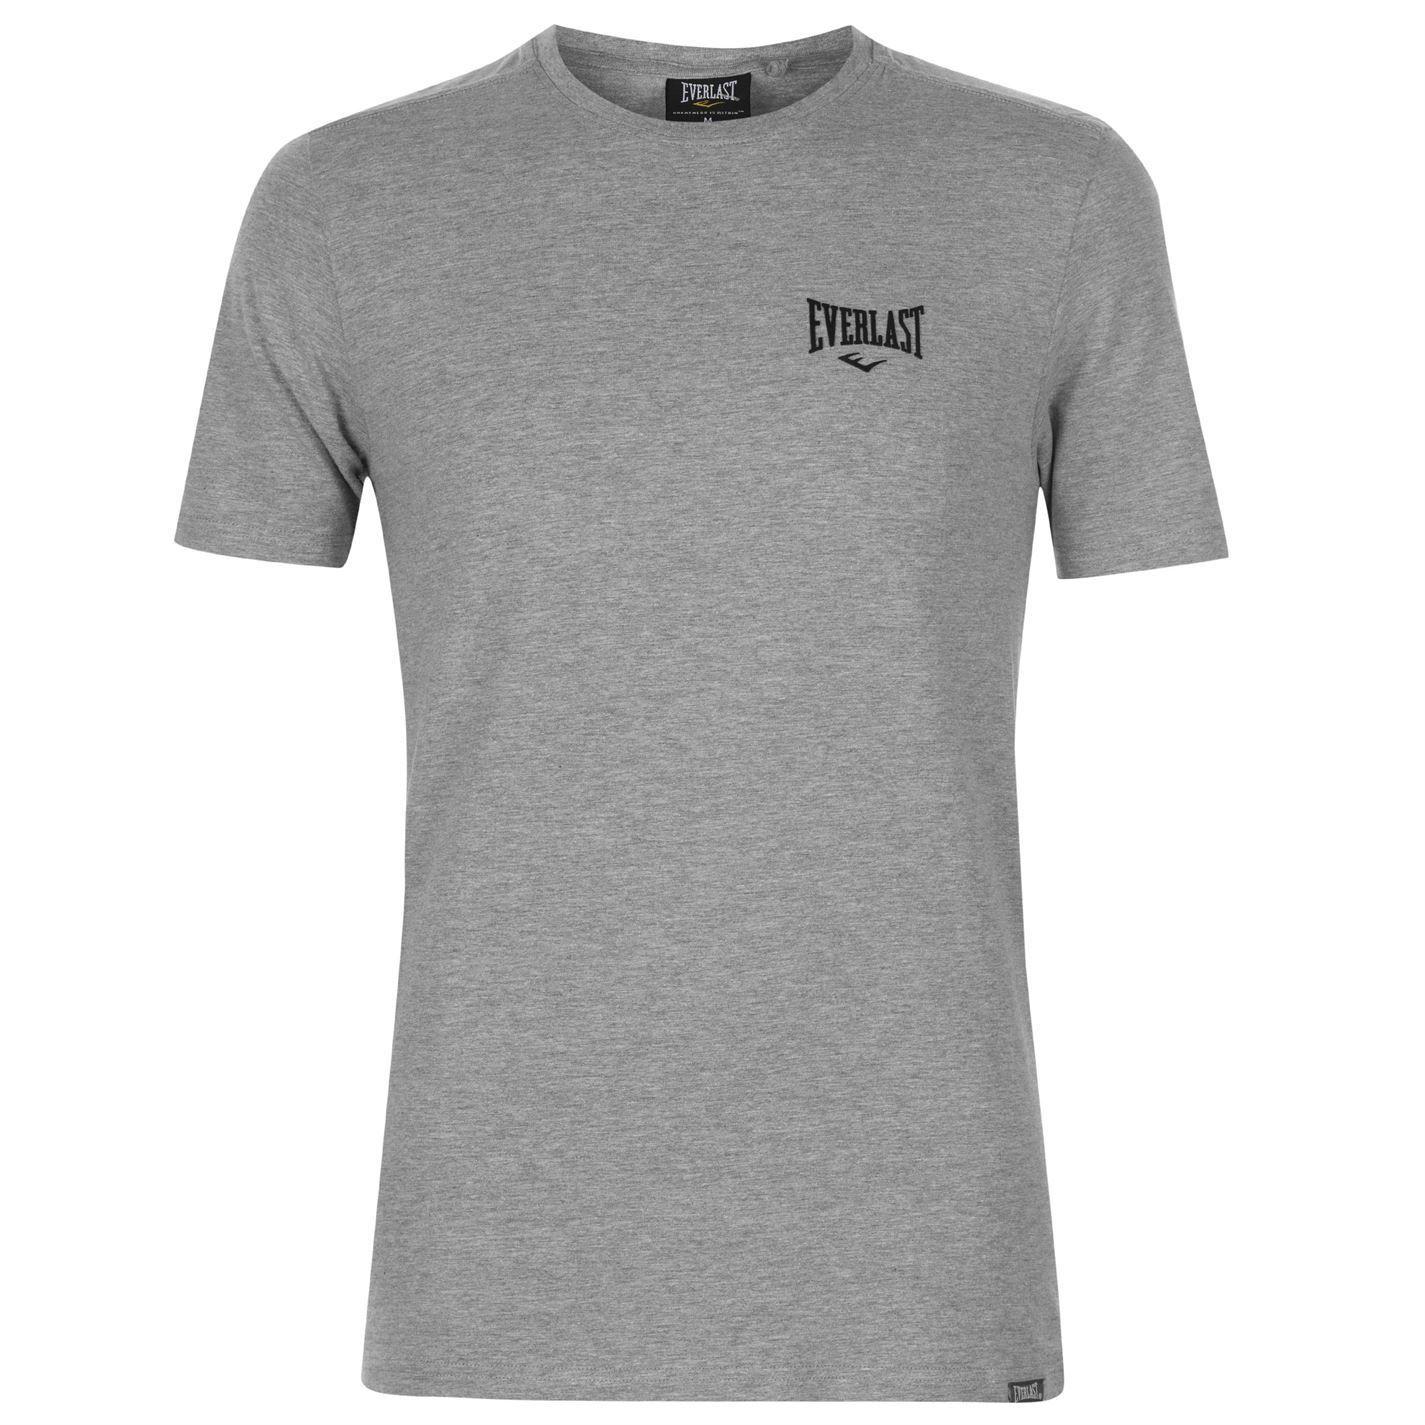 Everlast Logo - Everlast Logo T-Shirt Mens Boxing Top Tee Shirt Tshirt | eBay